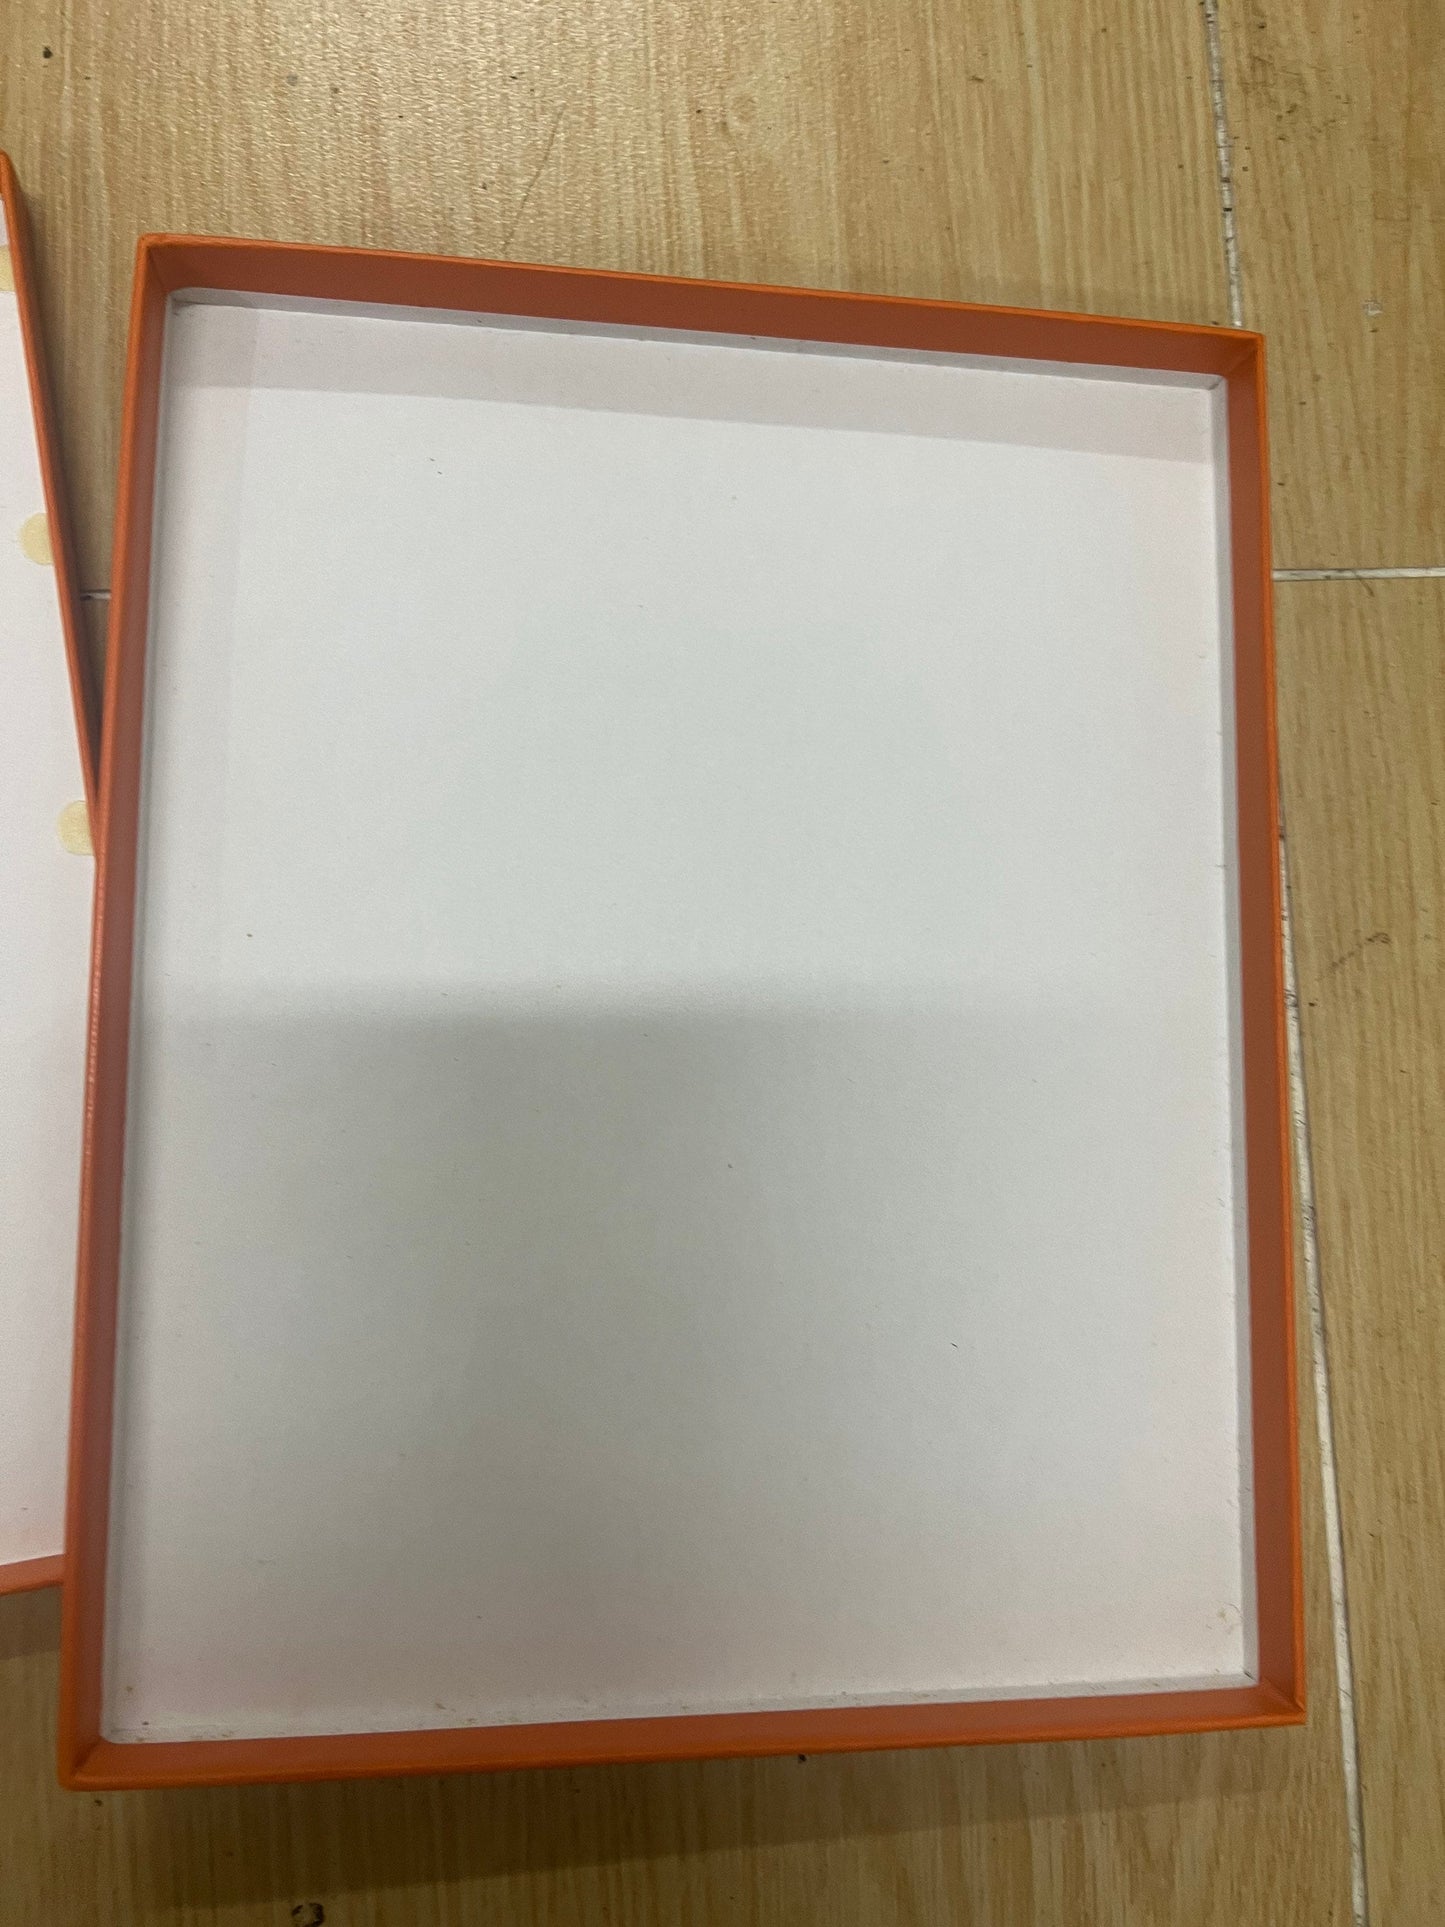 HERMES Counter Empty Orange Box Gift Box (7.5”x 9.2”x 1”)